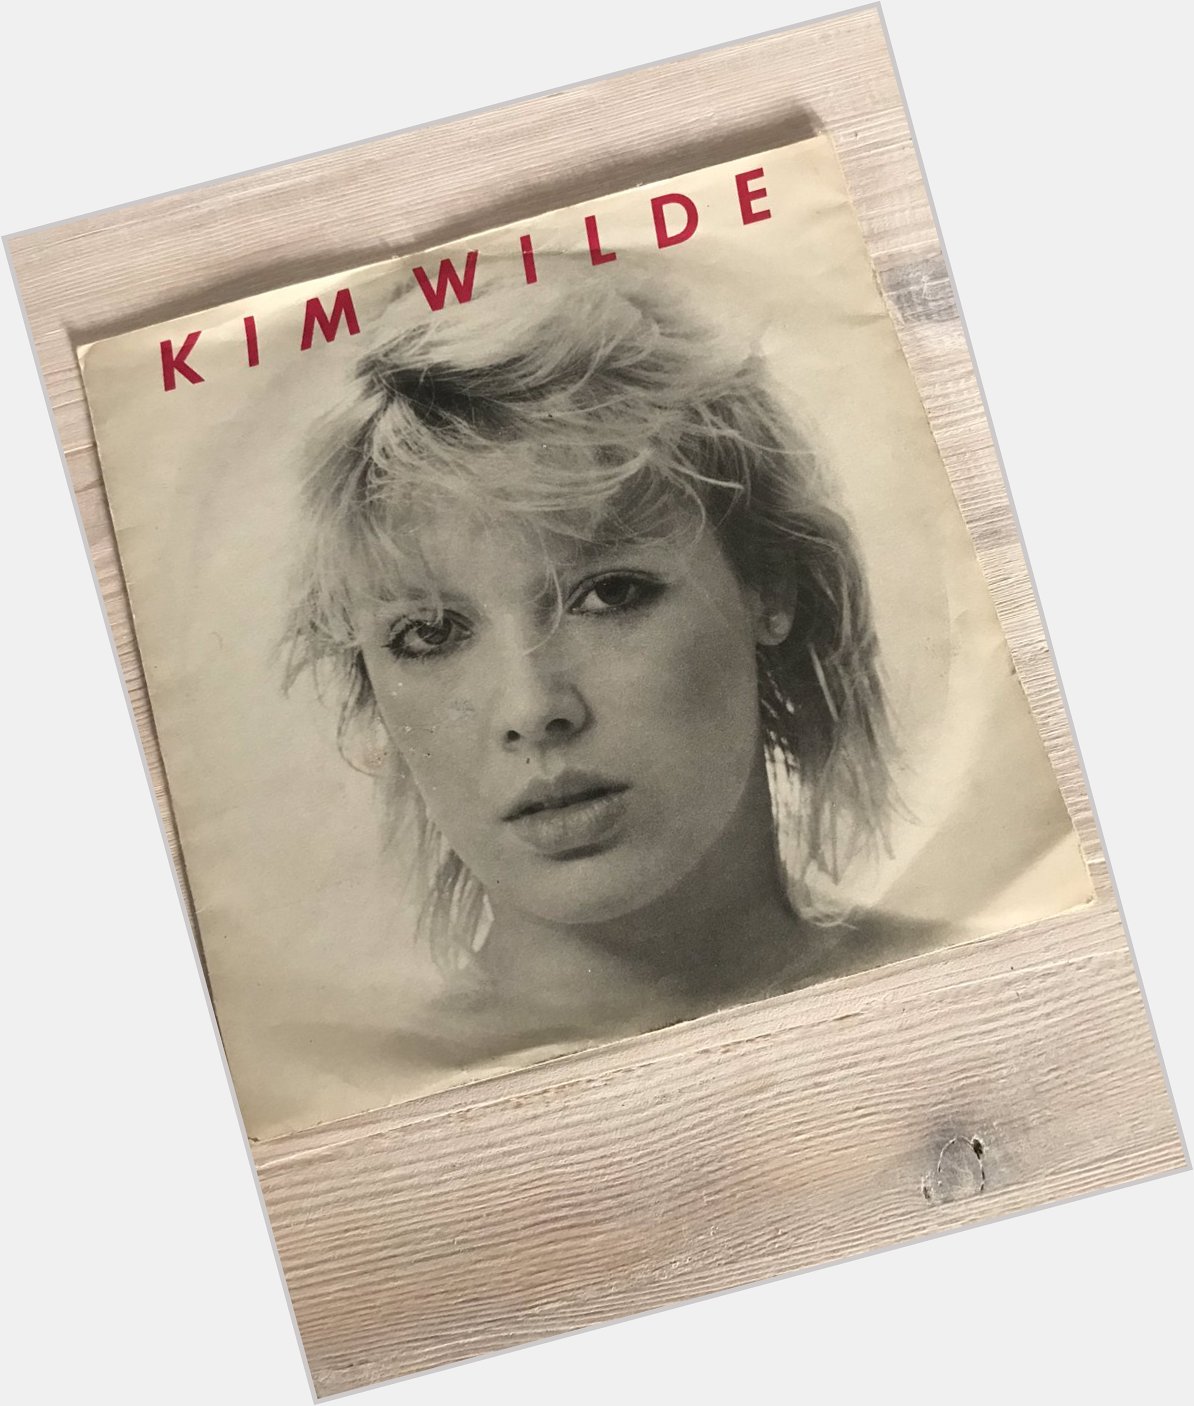 Happy birthday Kim Wilde       